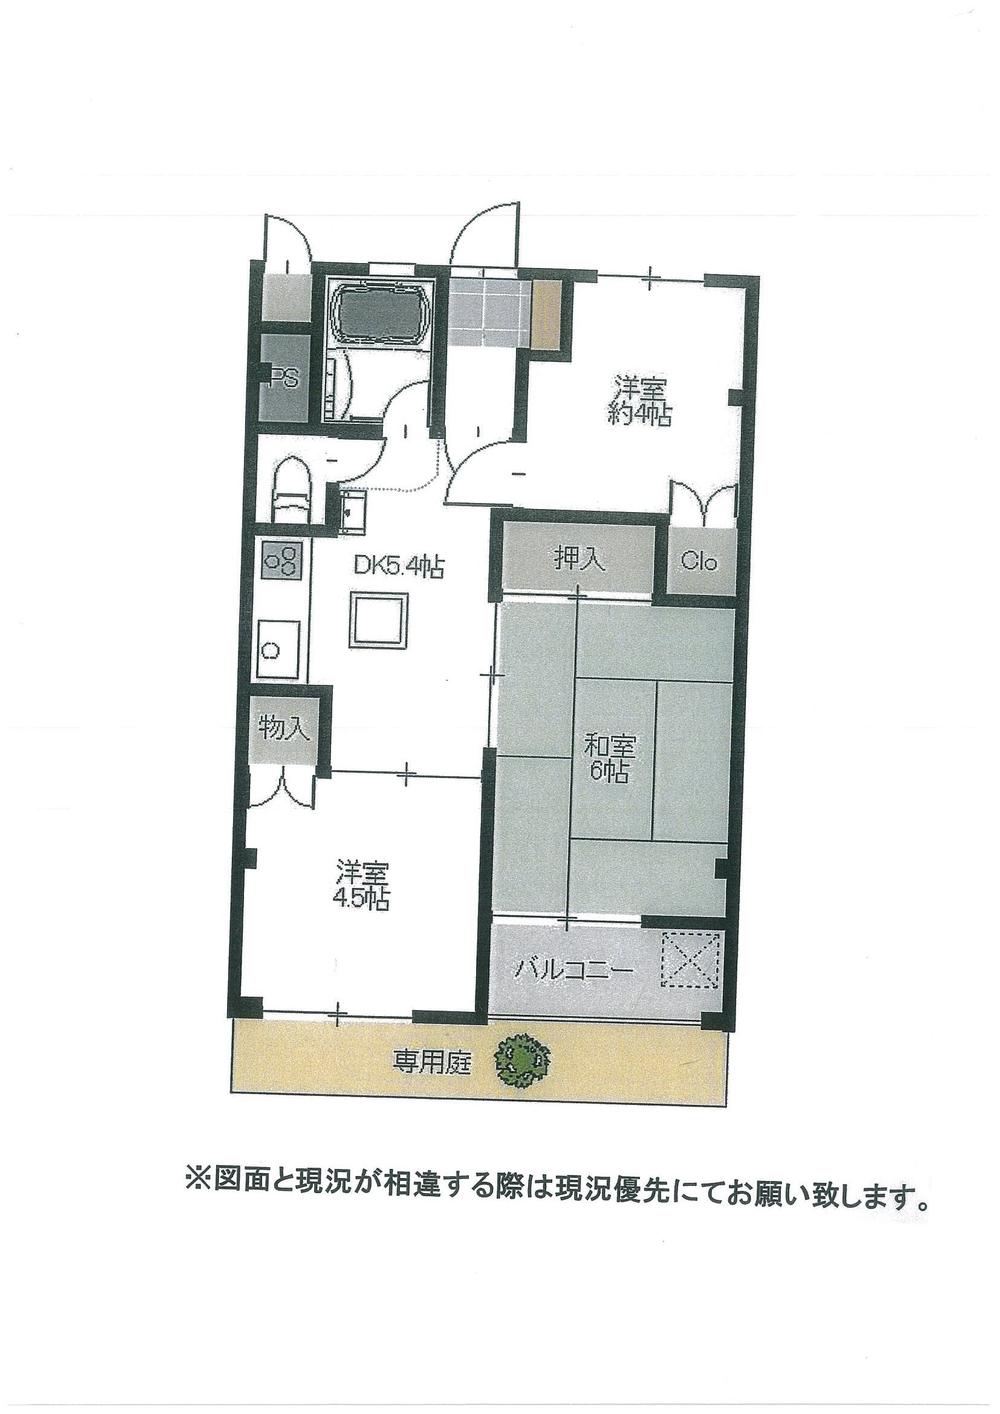 Floor plan. 3DK, Price 12.8 million yen, Occupied area 45.36 sq m , Balcony area 2.97 sq m